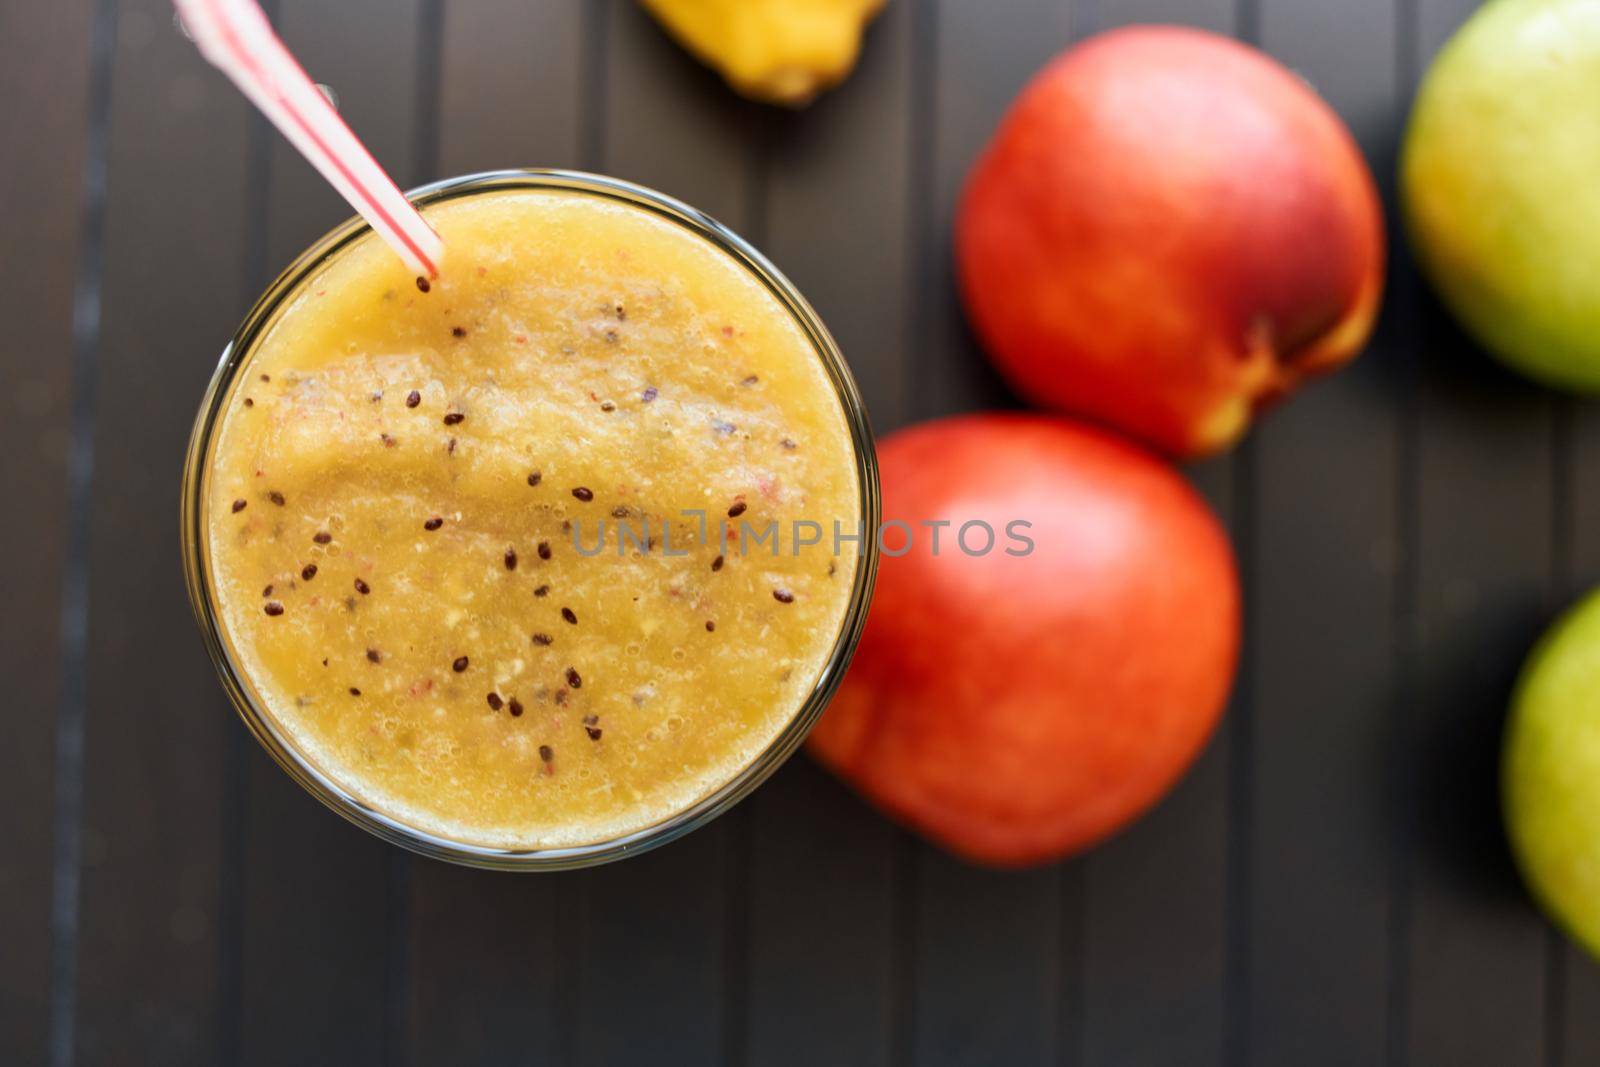 function fresh smoothie vitamins breakfast health organic by Vichizh